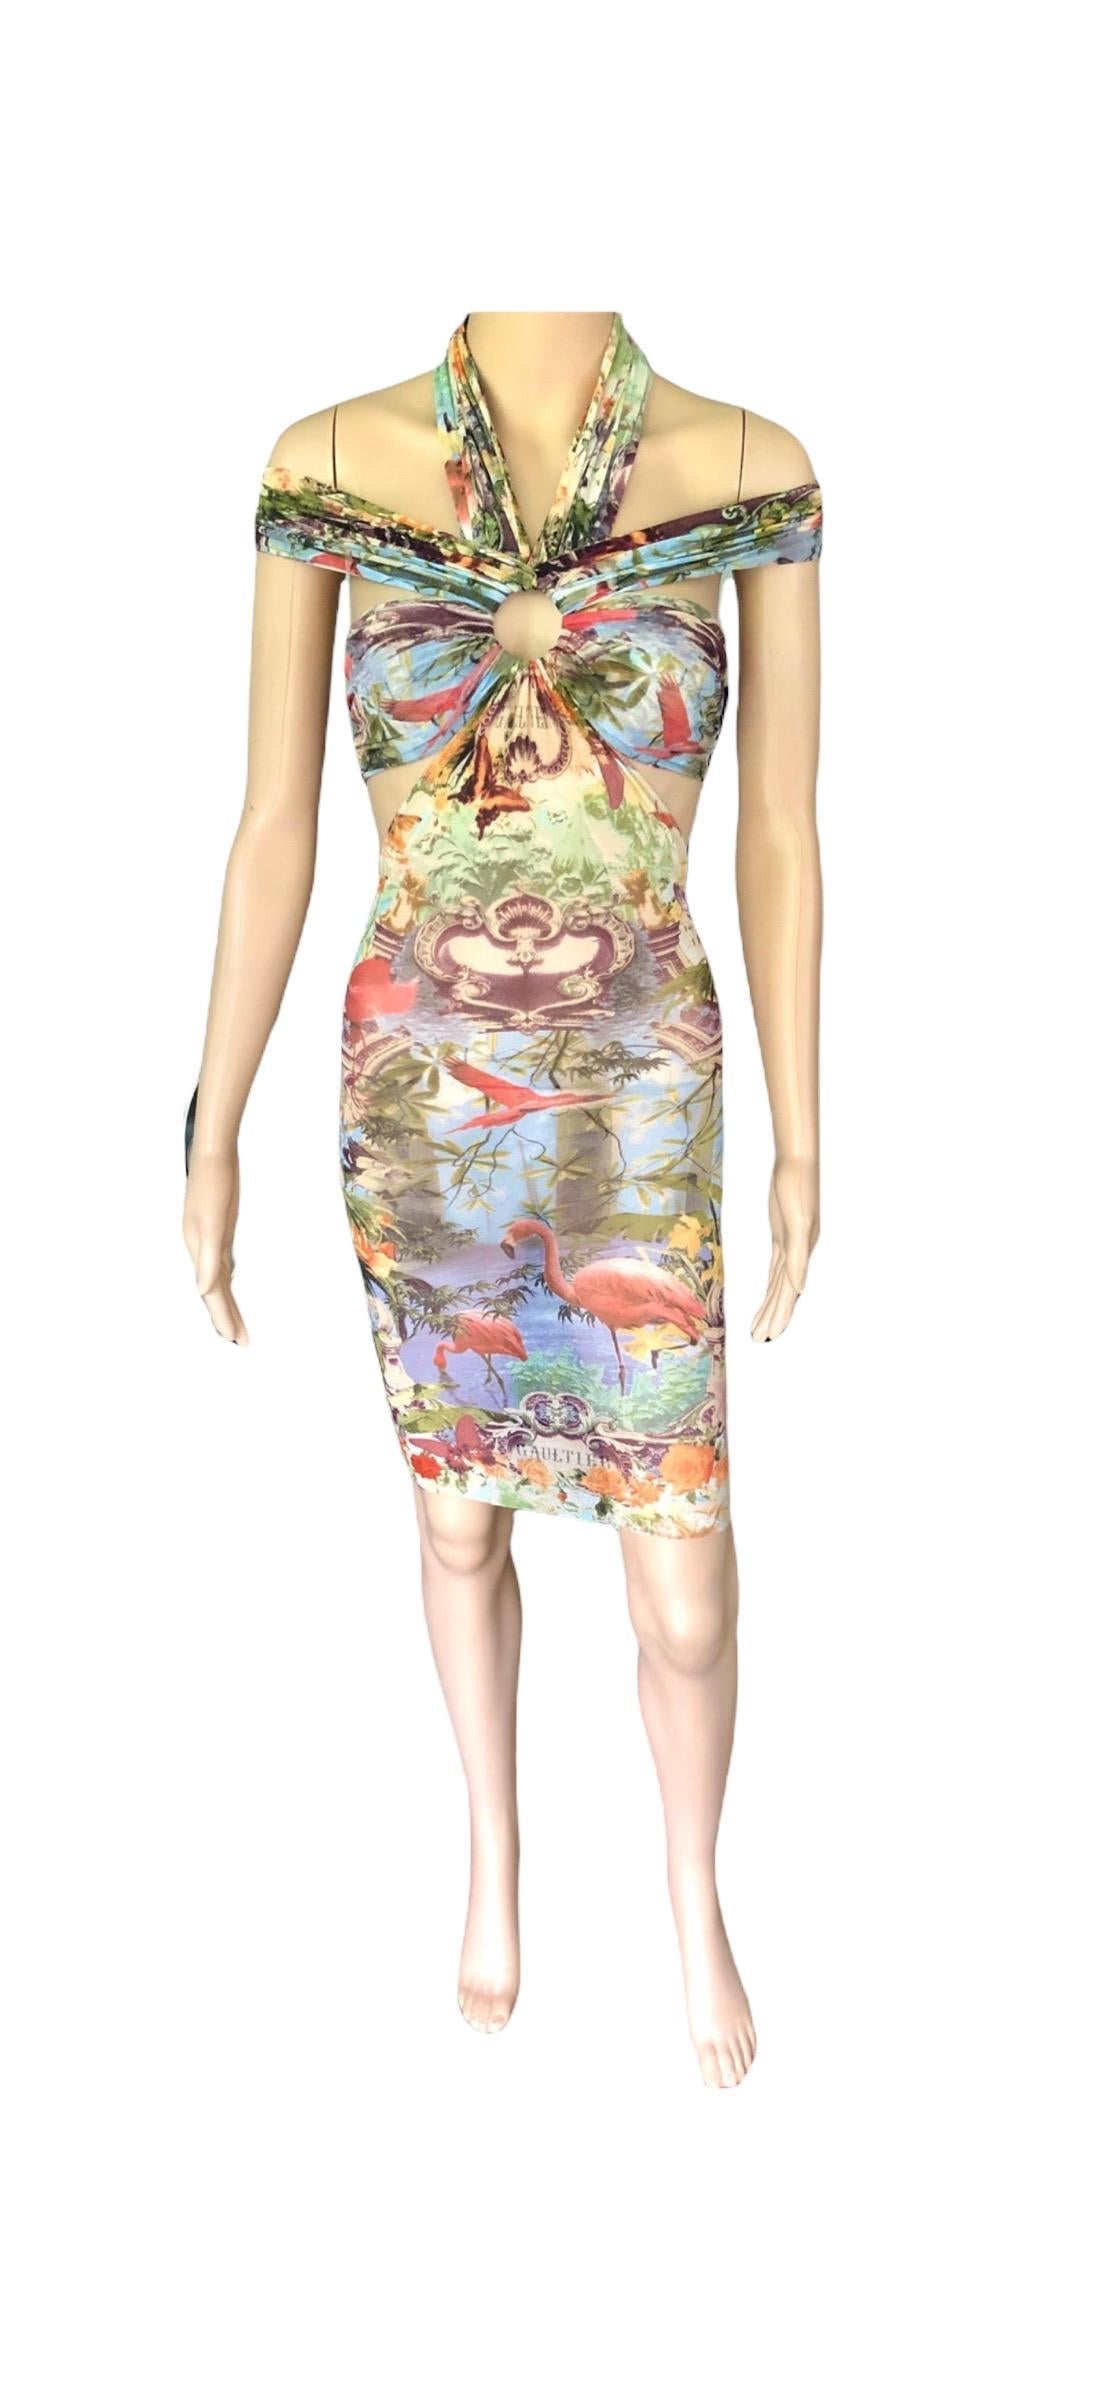 Women's or Men's Jean Paul Gaultier Soliel S/S1999 Flamingo Tropical Cutout Sheer Mesh Mini Dress For Sale